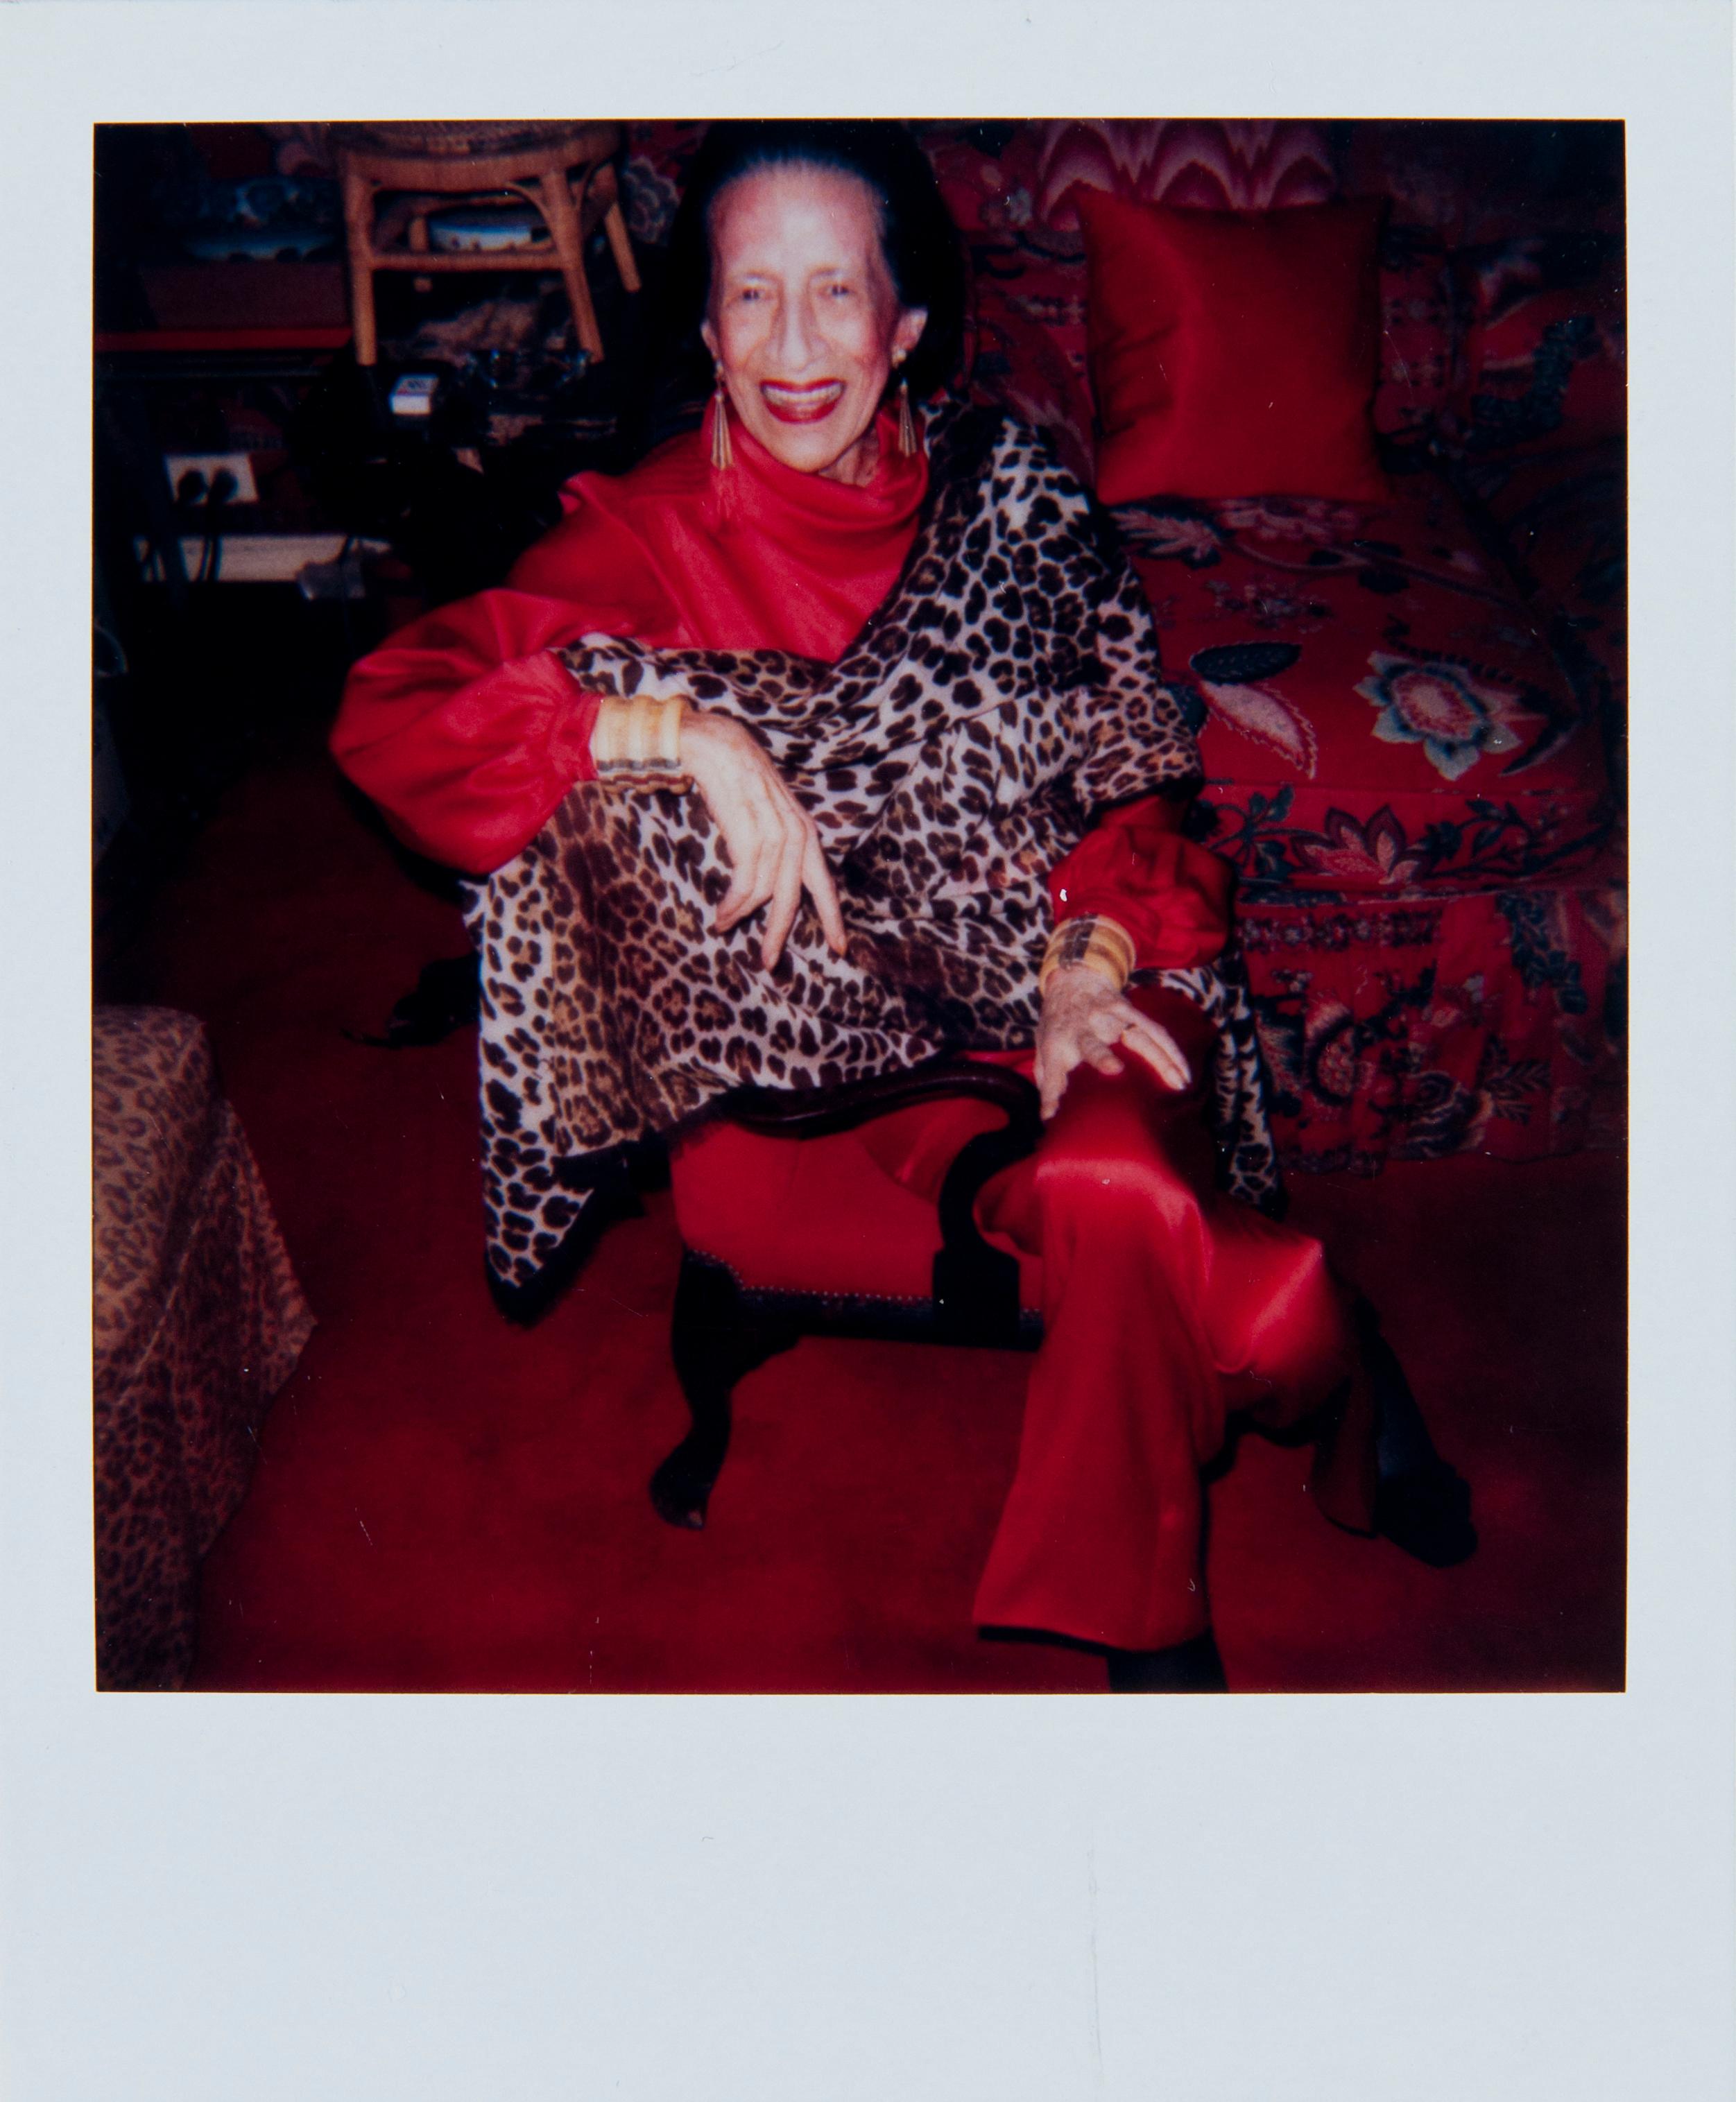 Andy Warhol, Polaroid Photograph of Diana Vreeland, 1983-4